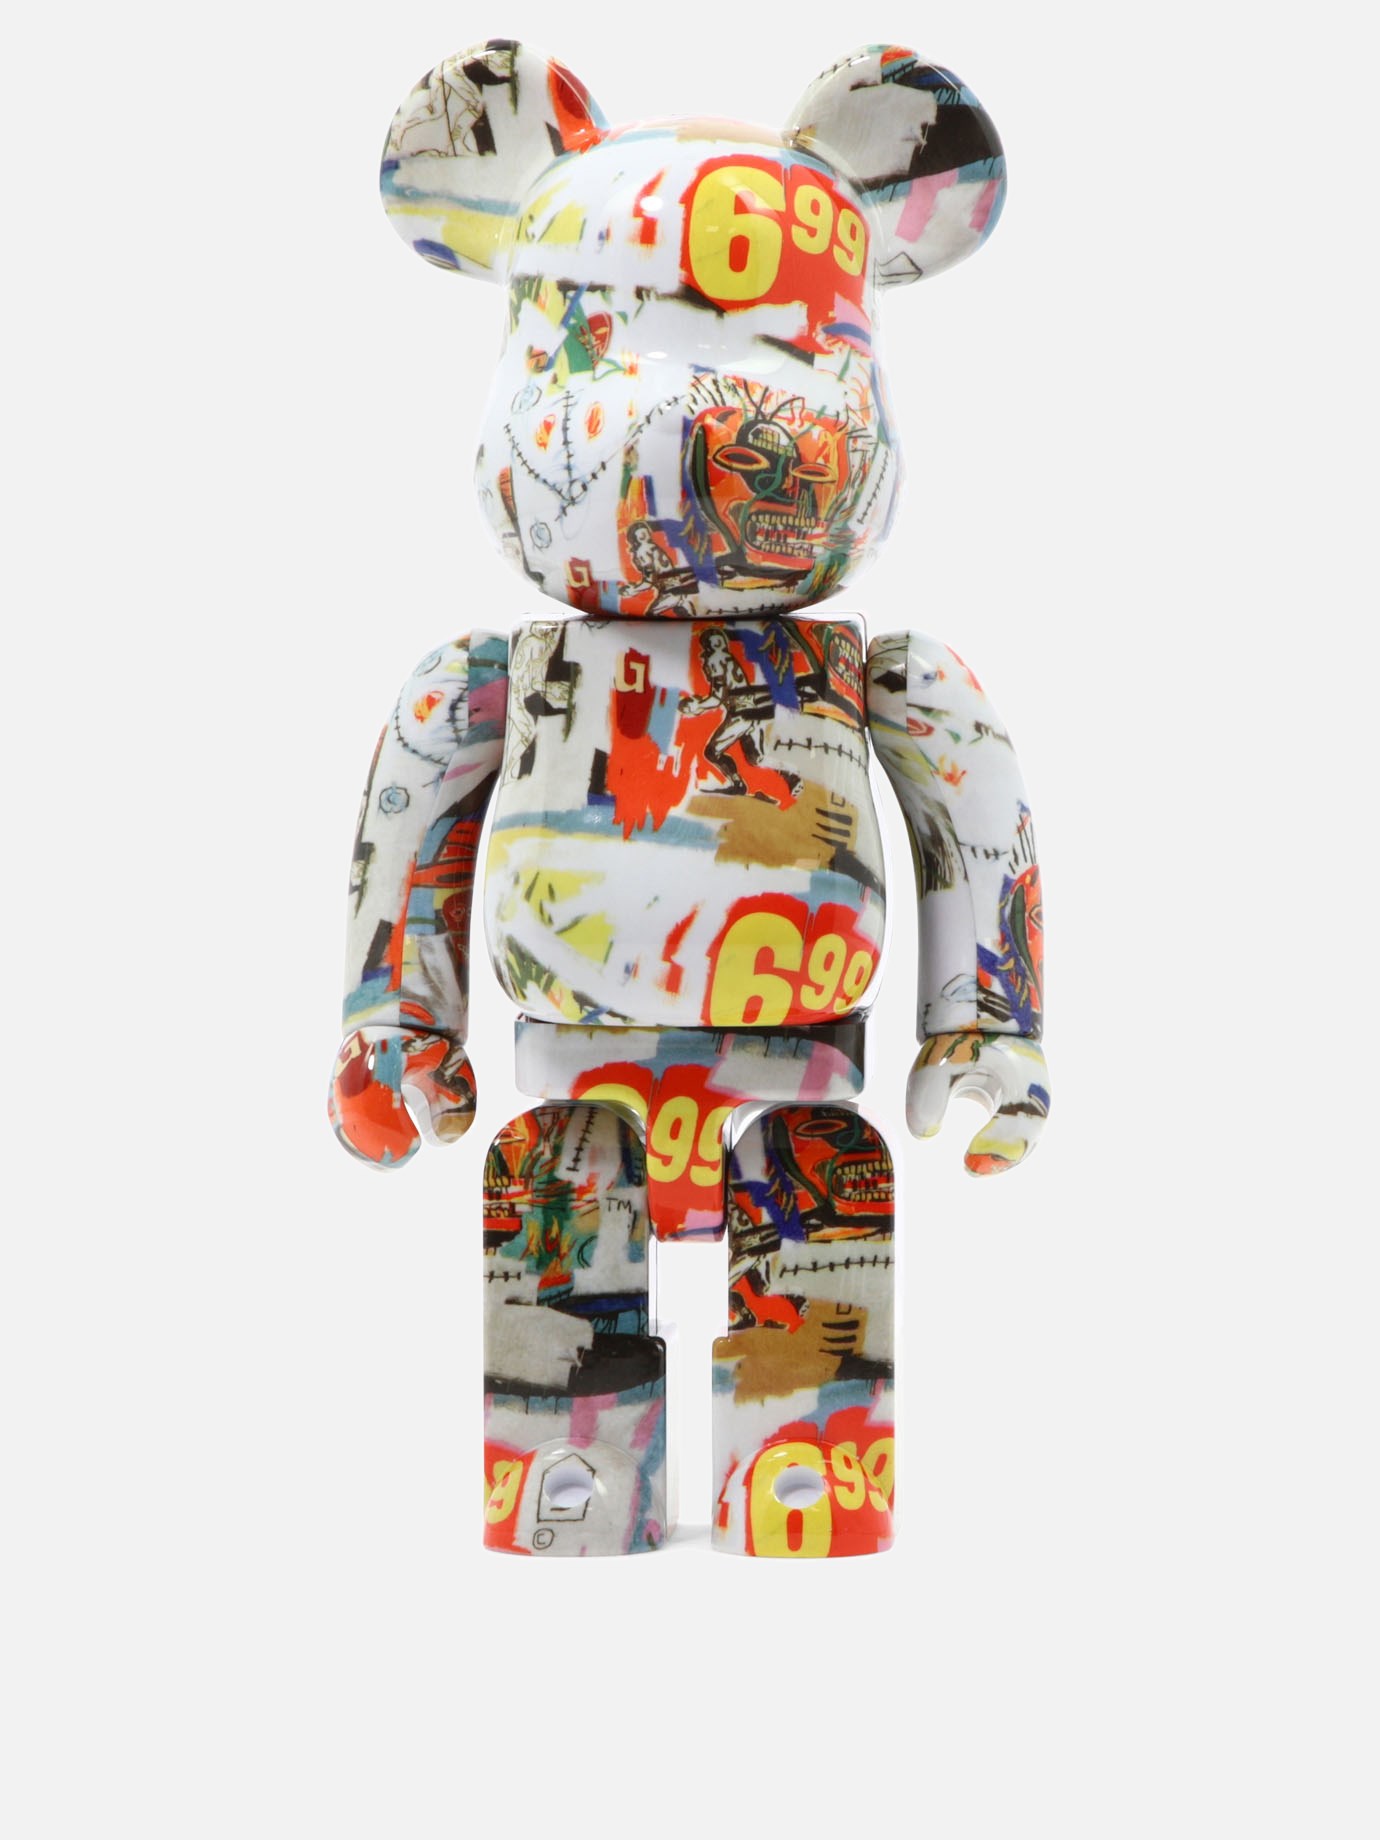  Andy Warhol x Jean-Michel Basquiat  Be@rbrickby Medicom Toy - 3